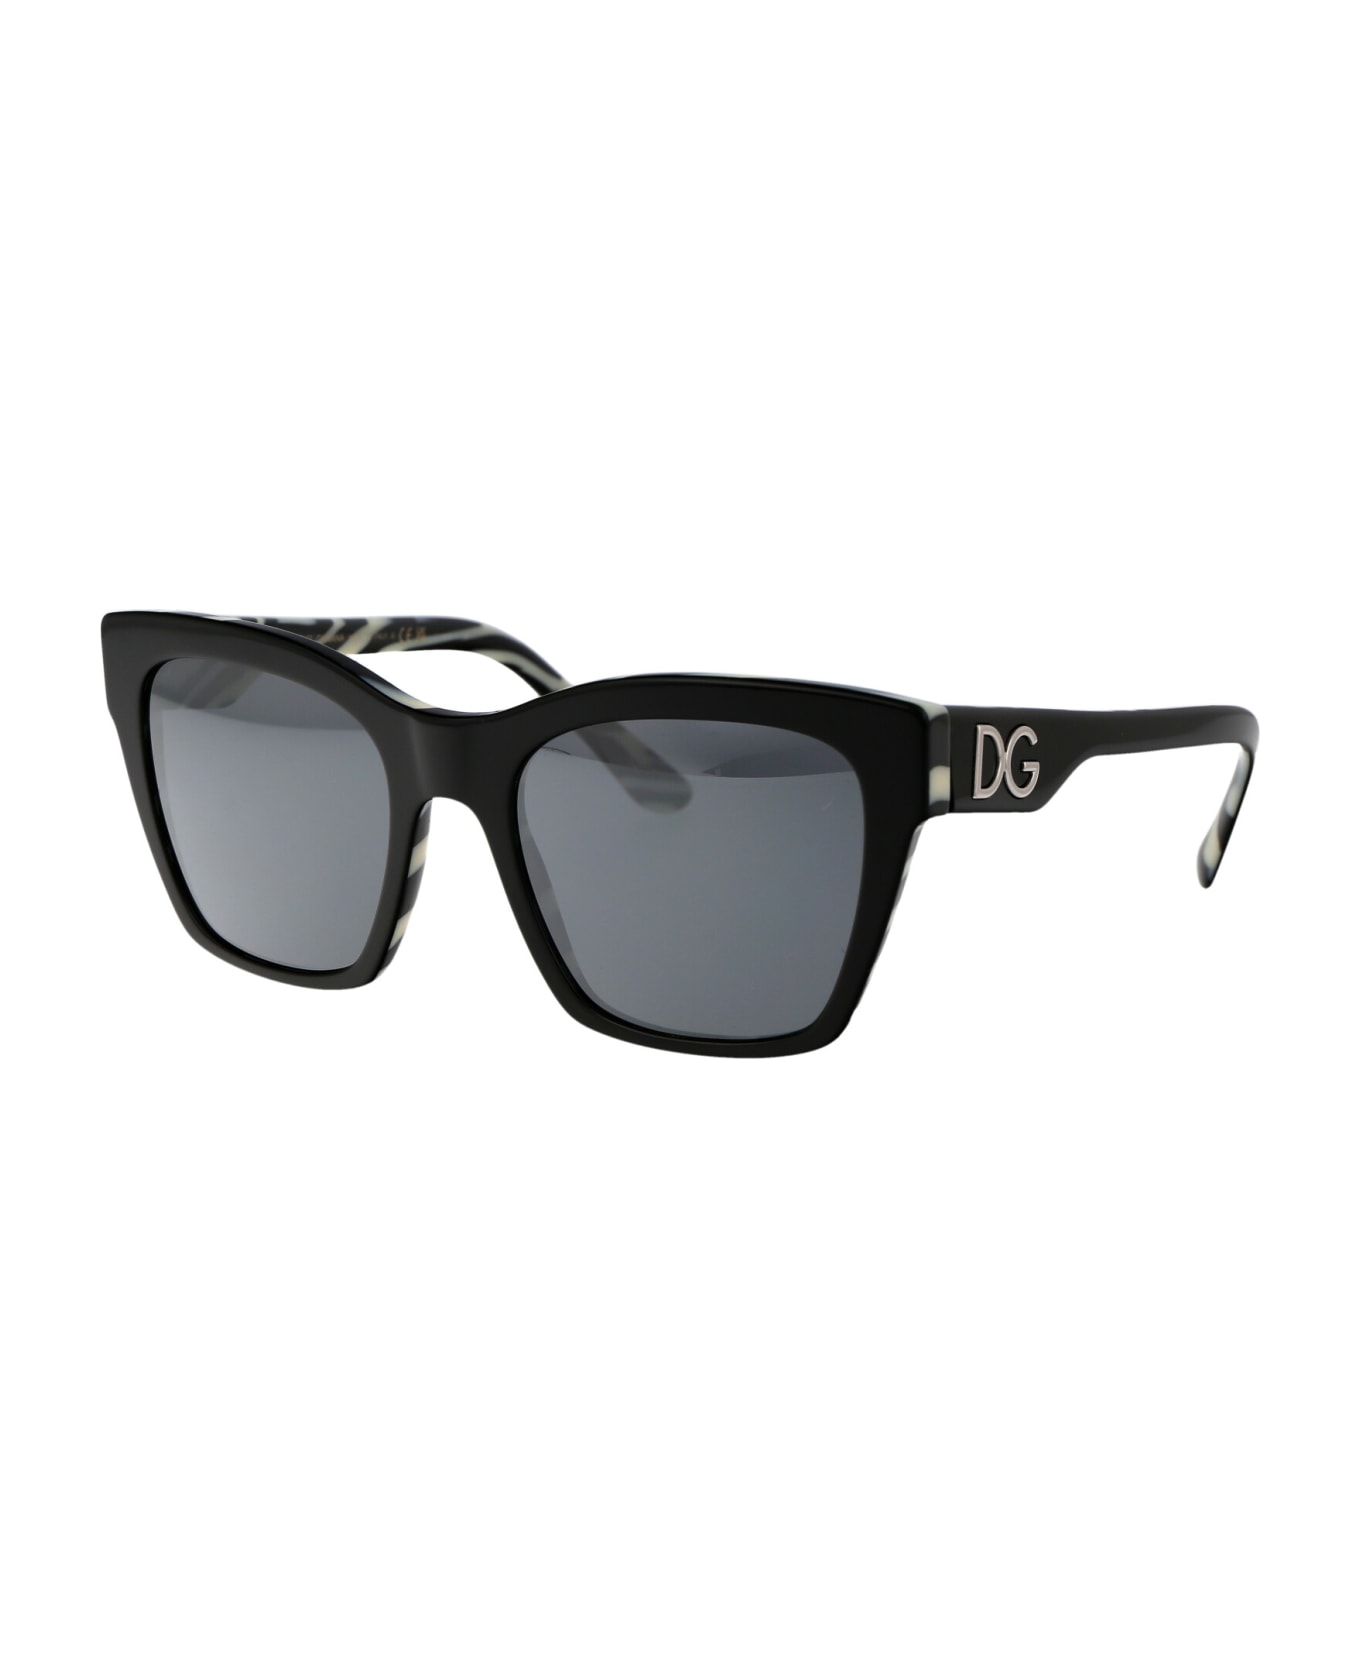 Dolce & Gabbana Eyewear 0dg4384 Sunglasses - 33726G Black On Zebra サングラス